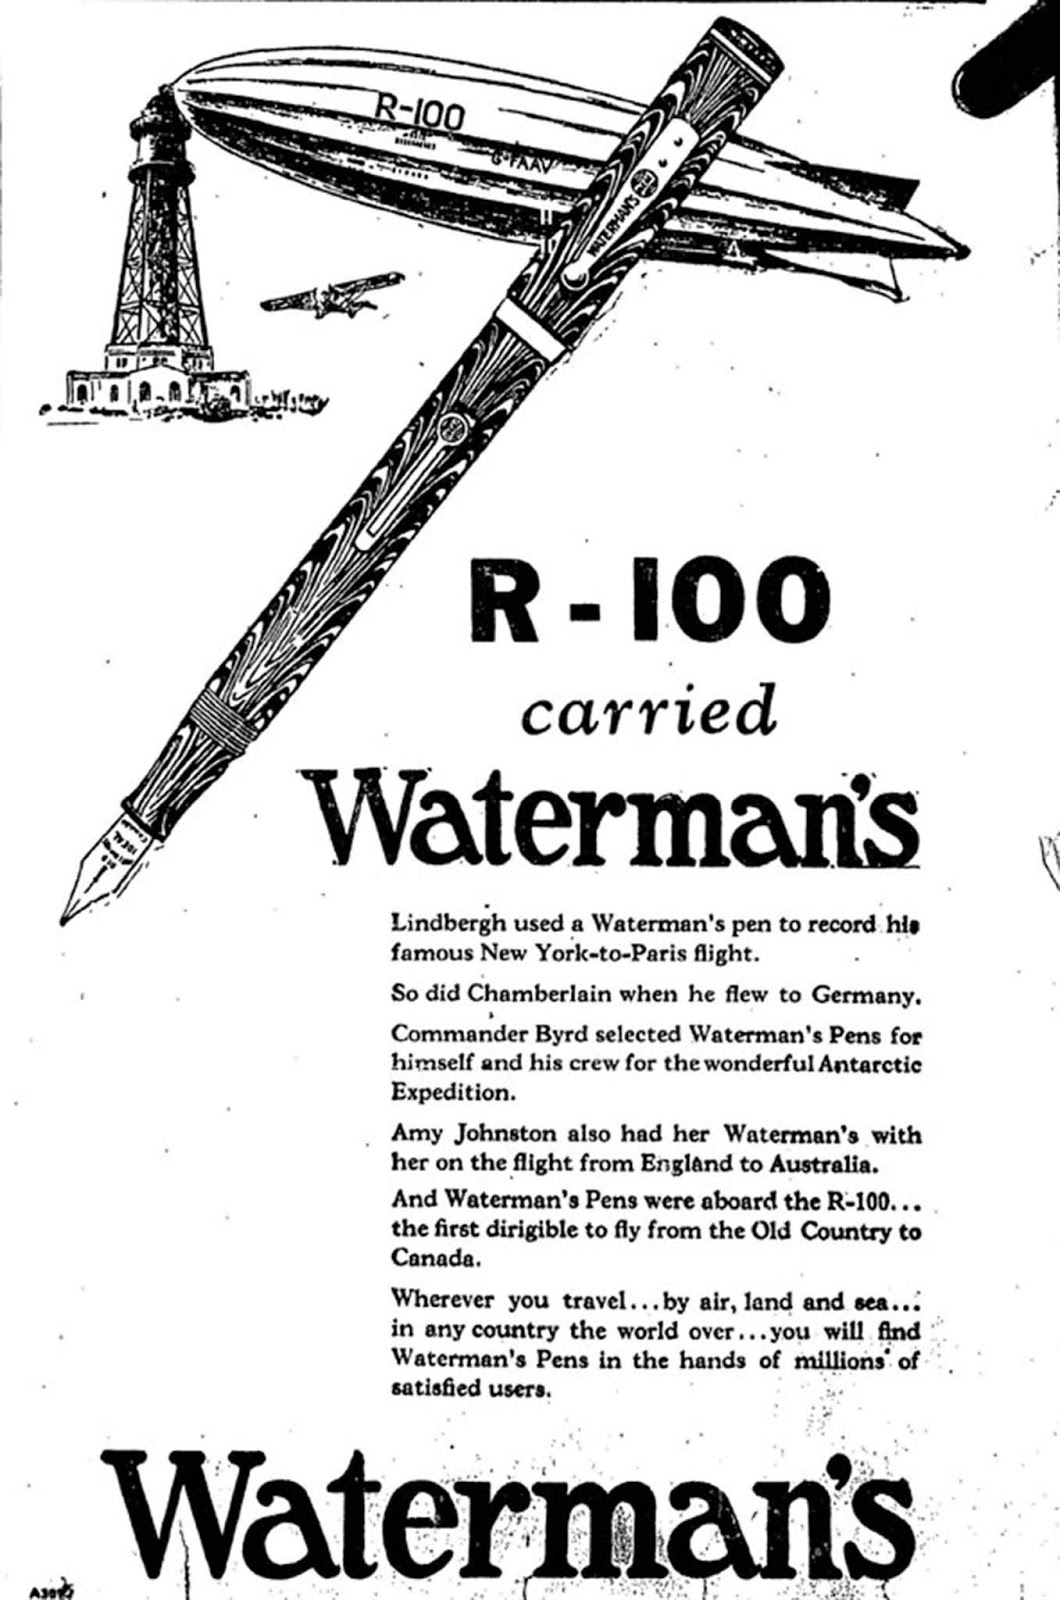 Advertising brochure for R-100.